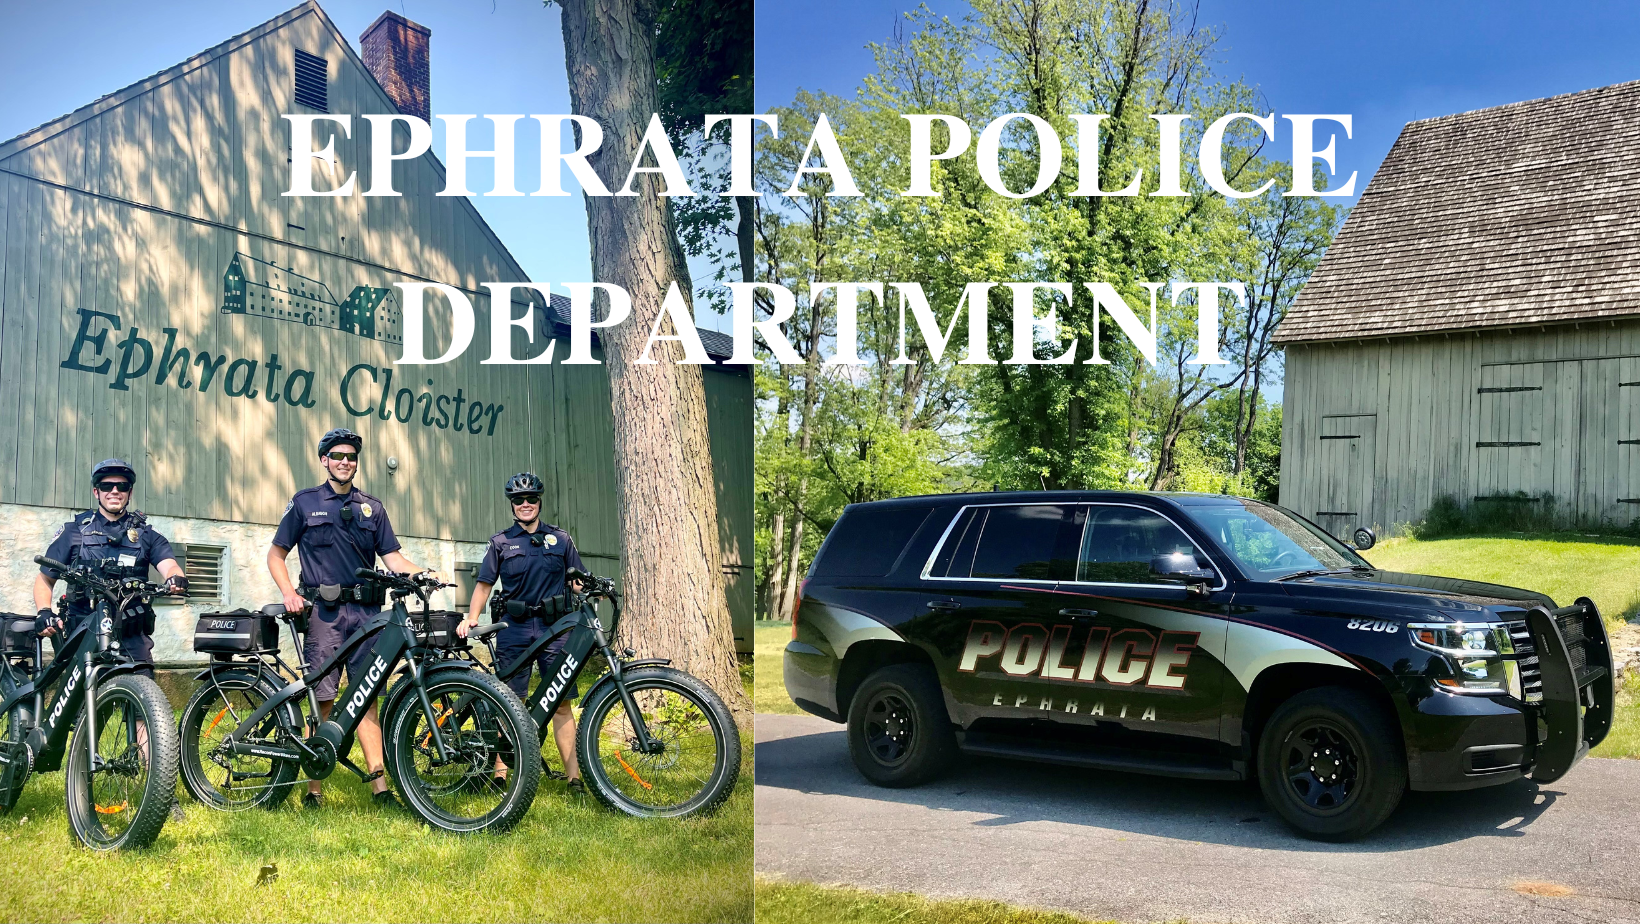 Ephrata Police Department, PA 